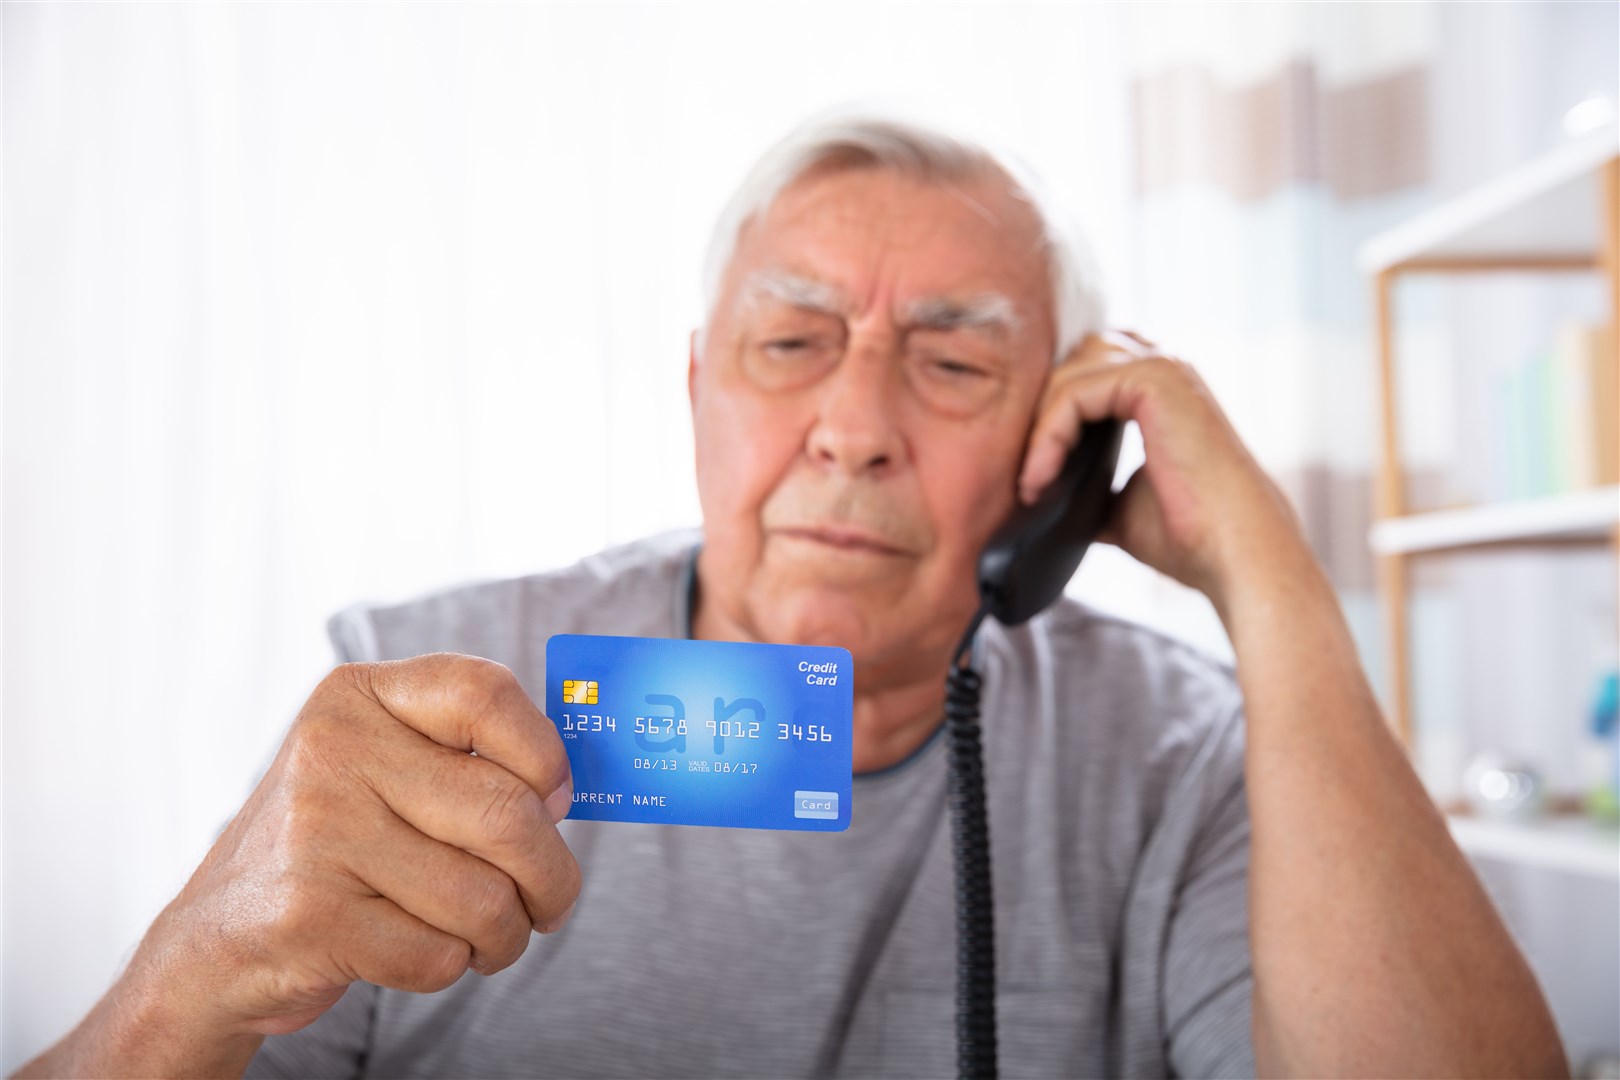 Close-up Of A Senior Man With Credit Card Using Landline Phone